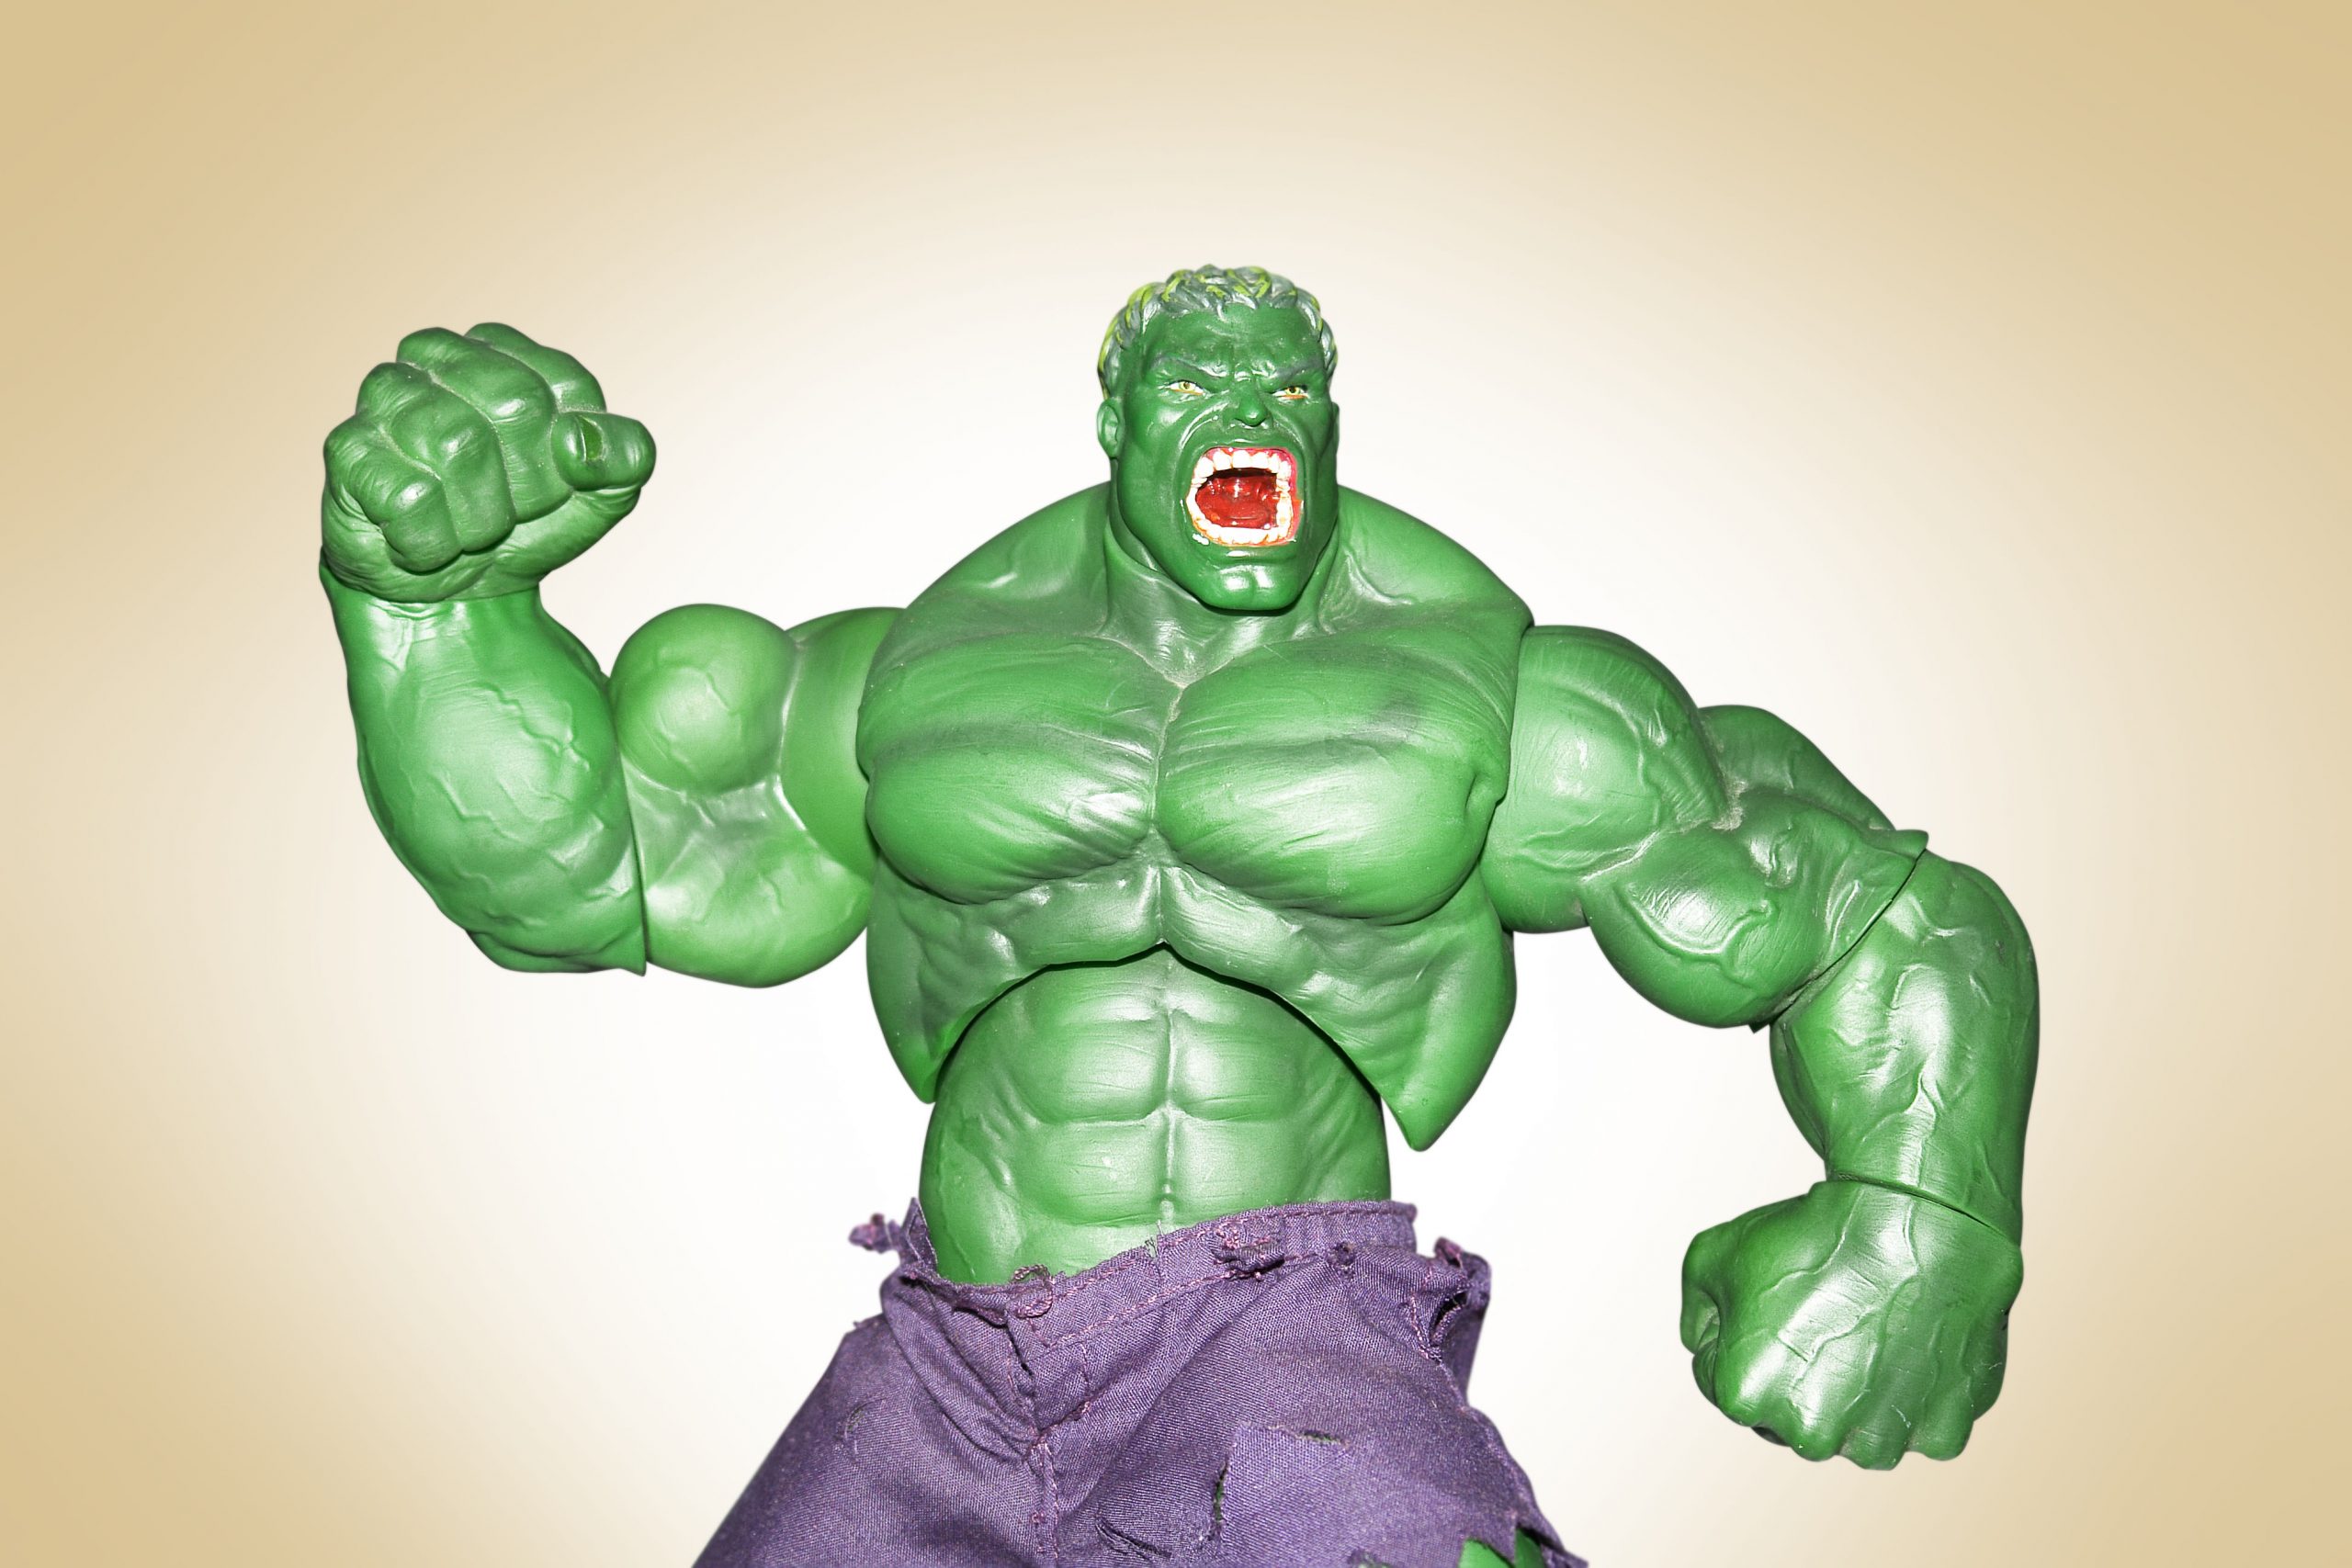 The Hulk Factor